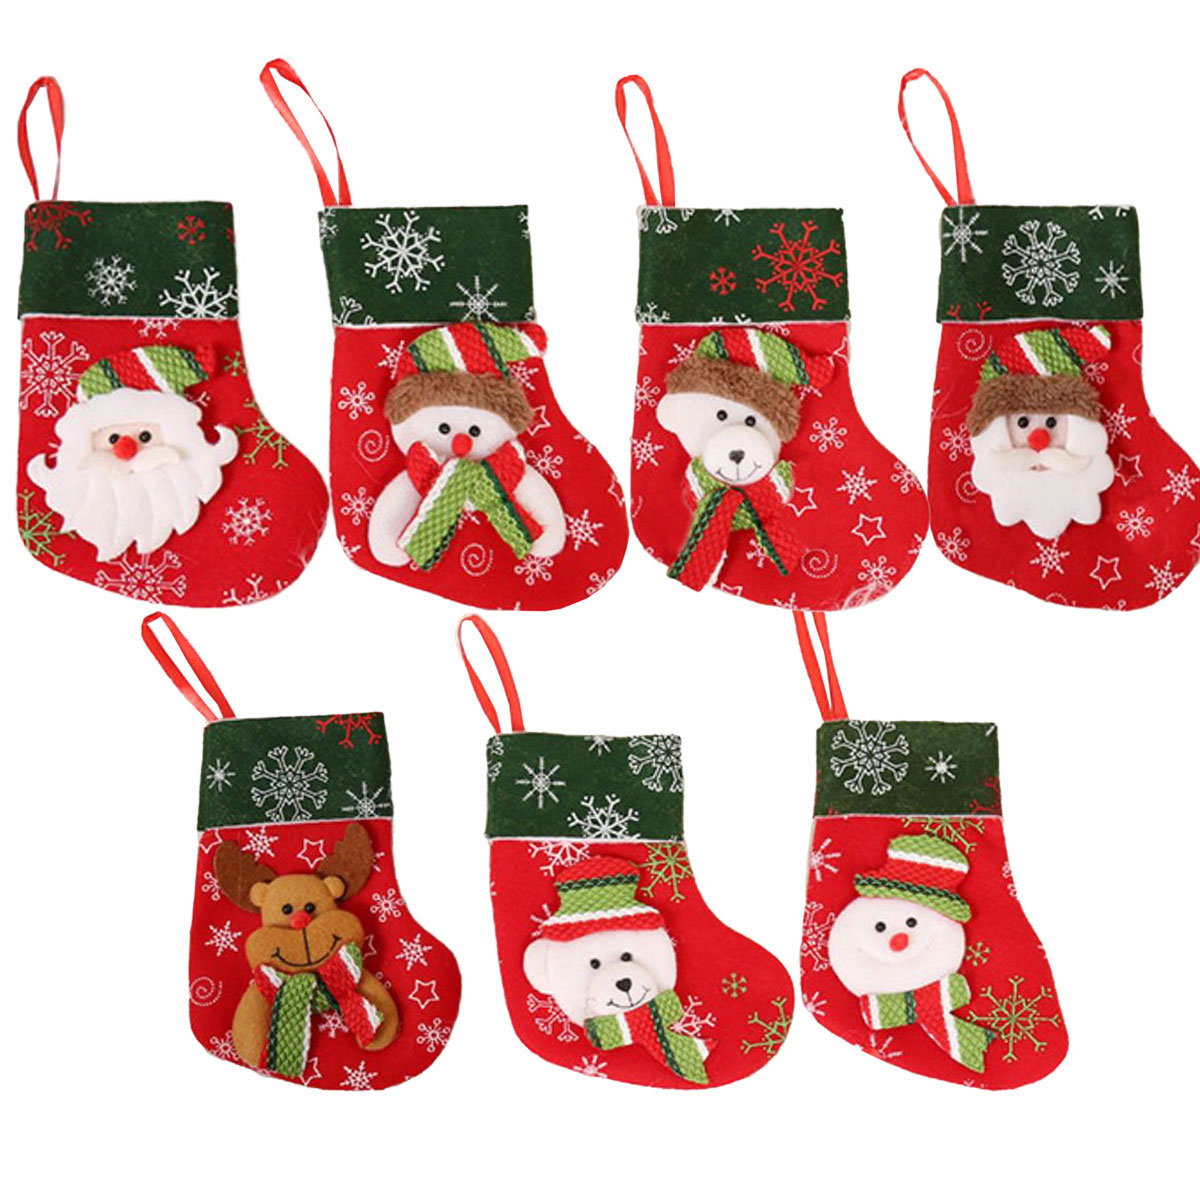 y539 クリスマス ツリー 飾り 靴下 クリスマスツリー オーナメント くつ下 パーティー 飾り付け おしゃれ 装飾 デコレーション | iikuru